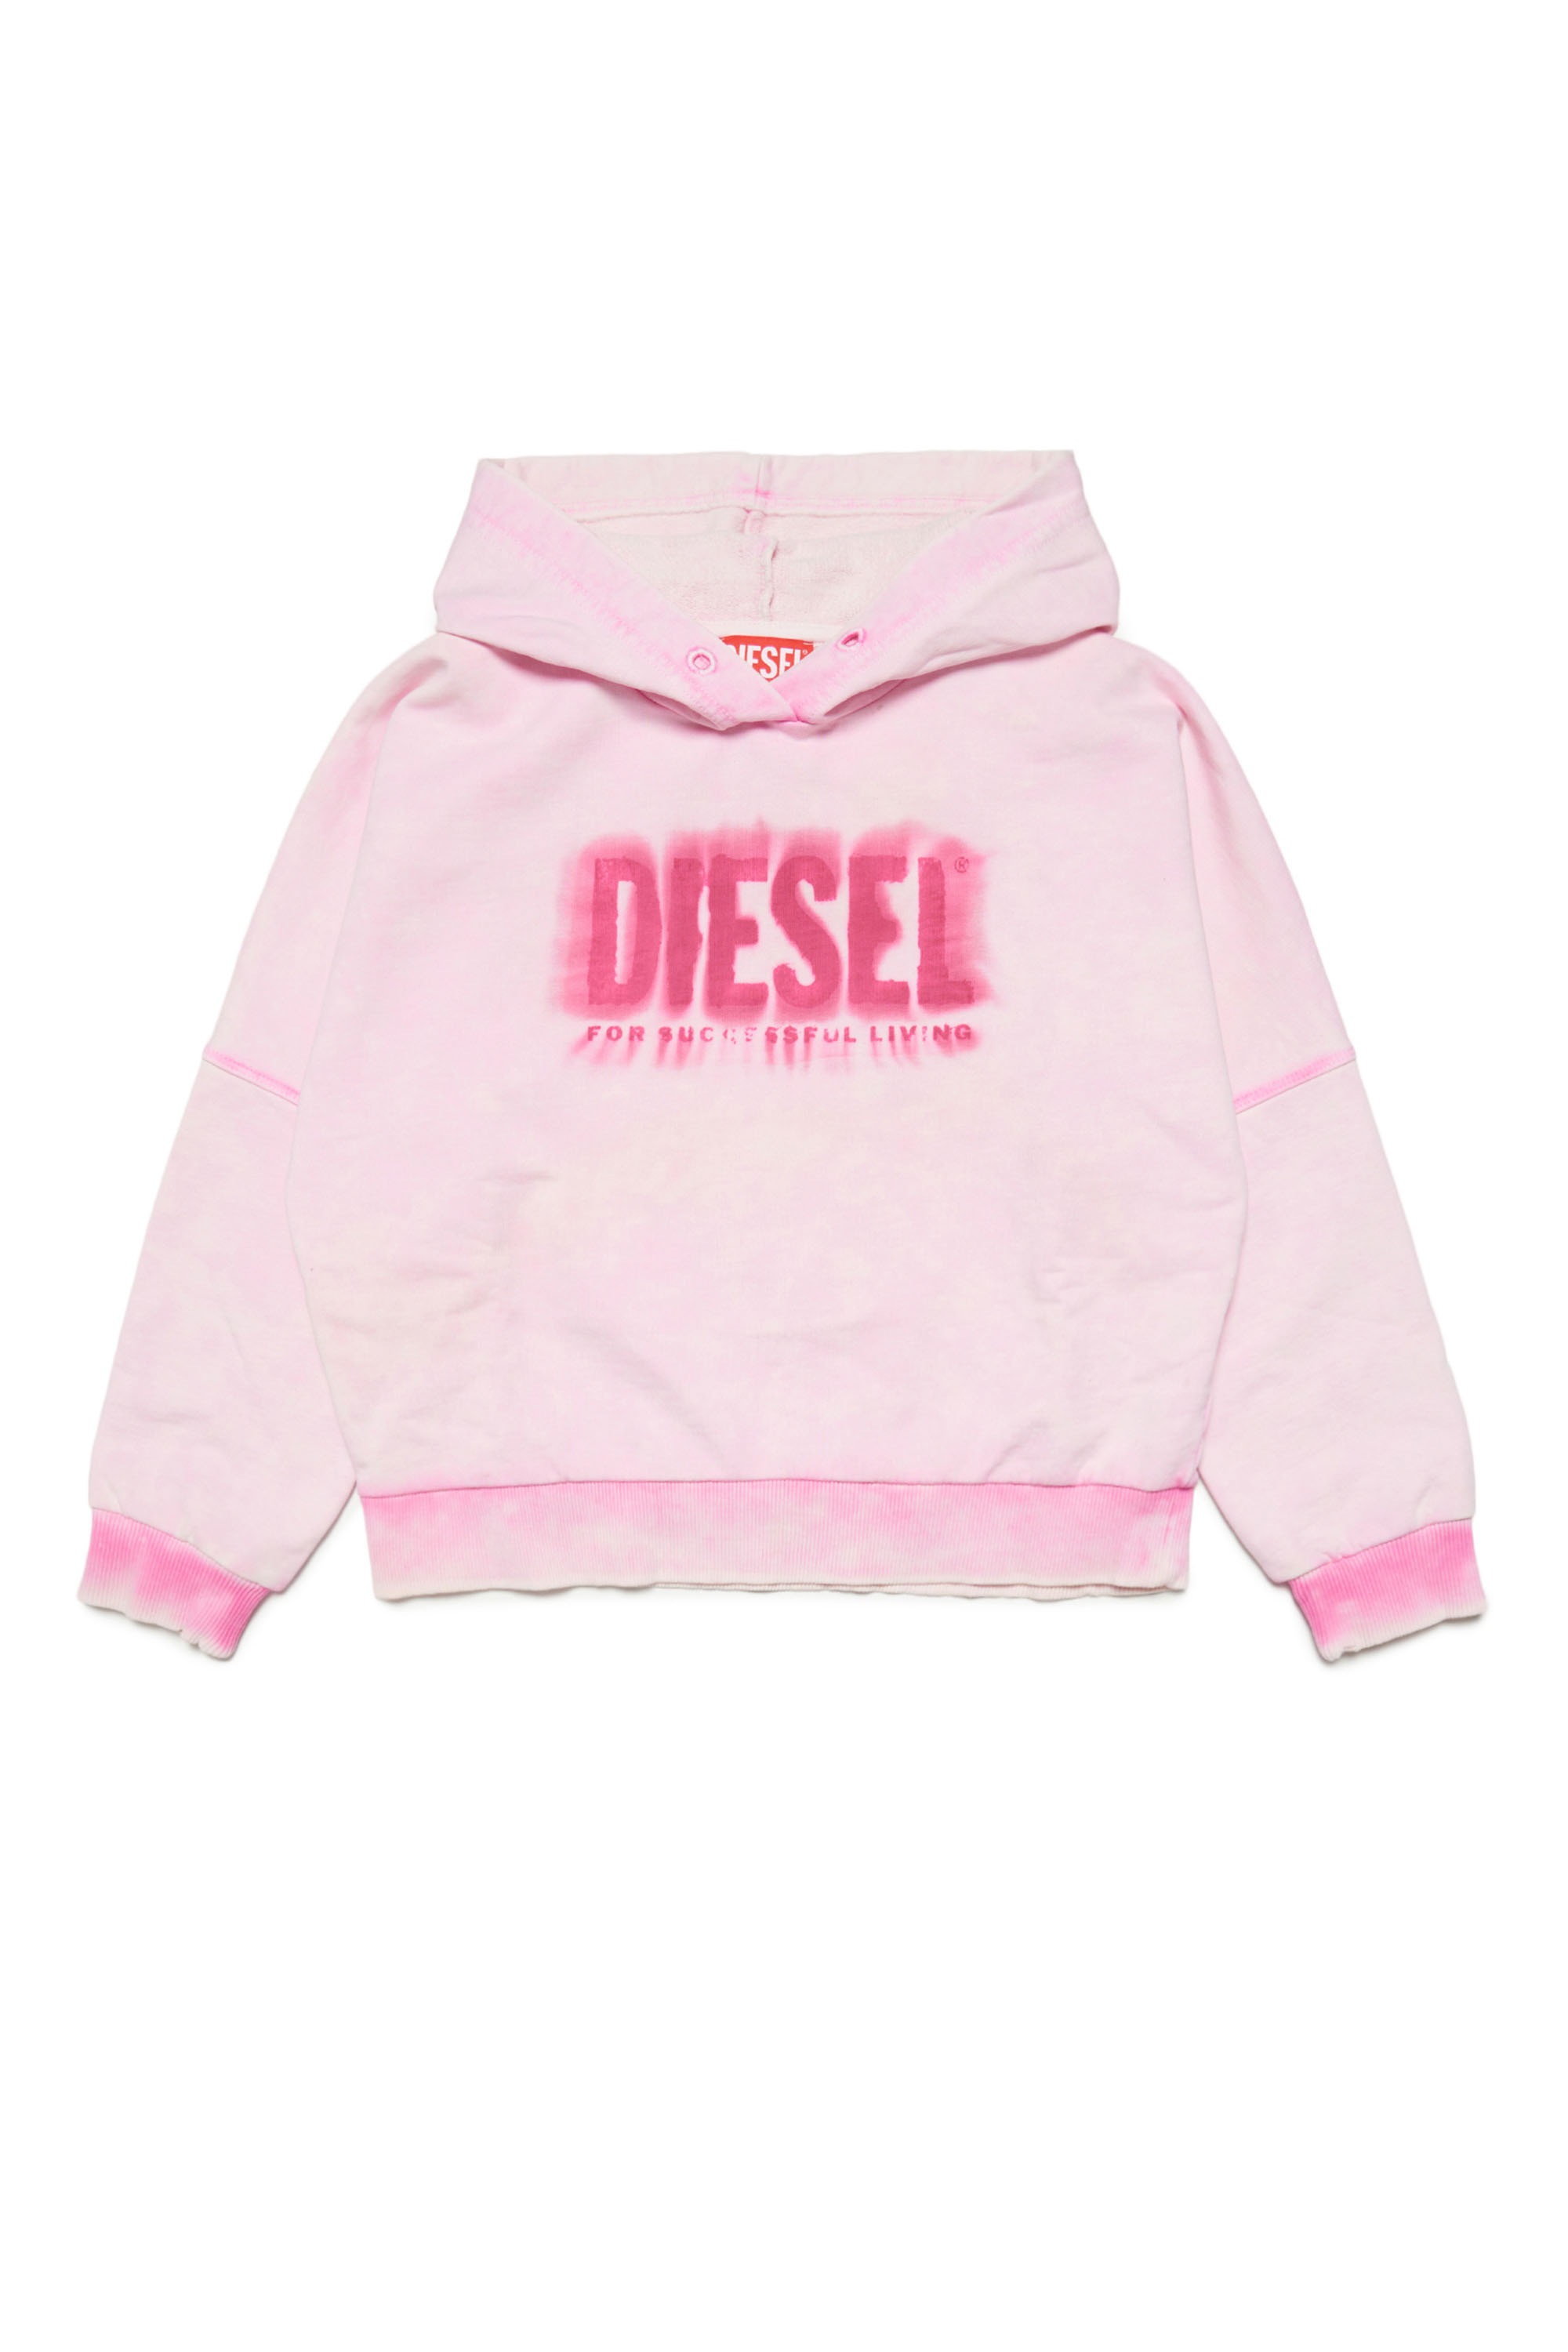 Diesel - SQUINGY, Pink - Image 1